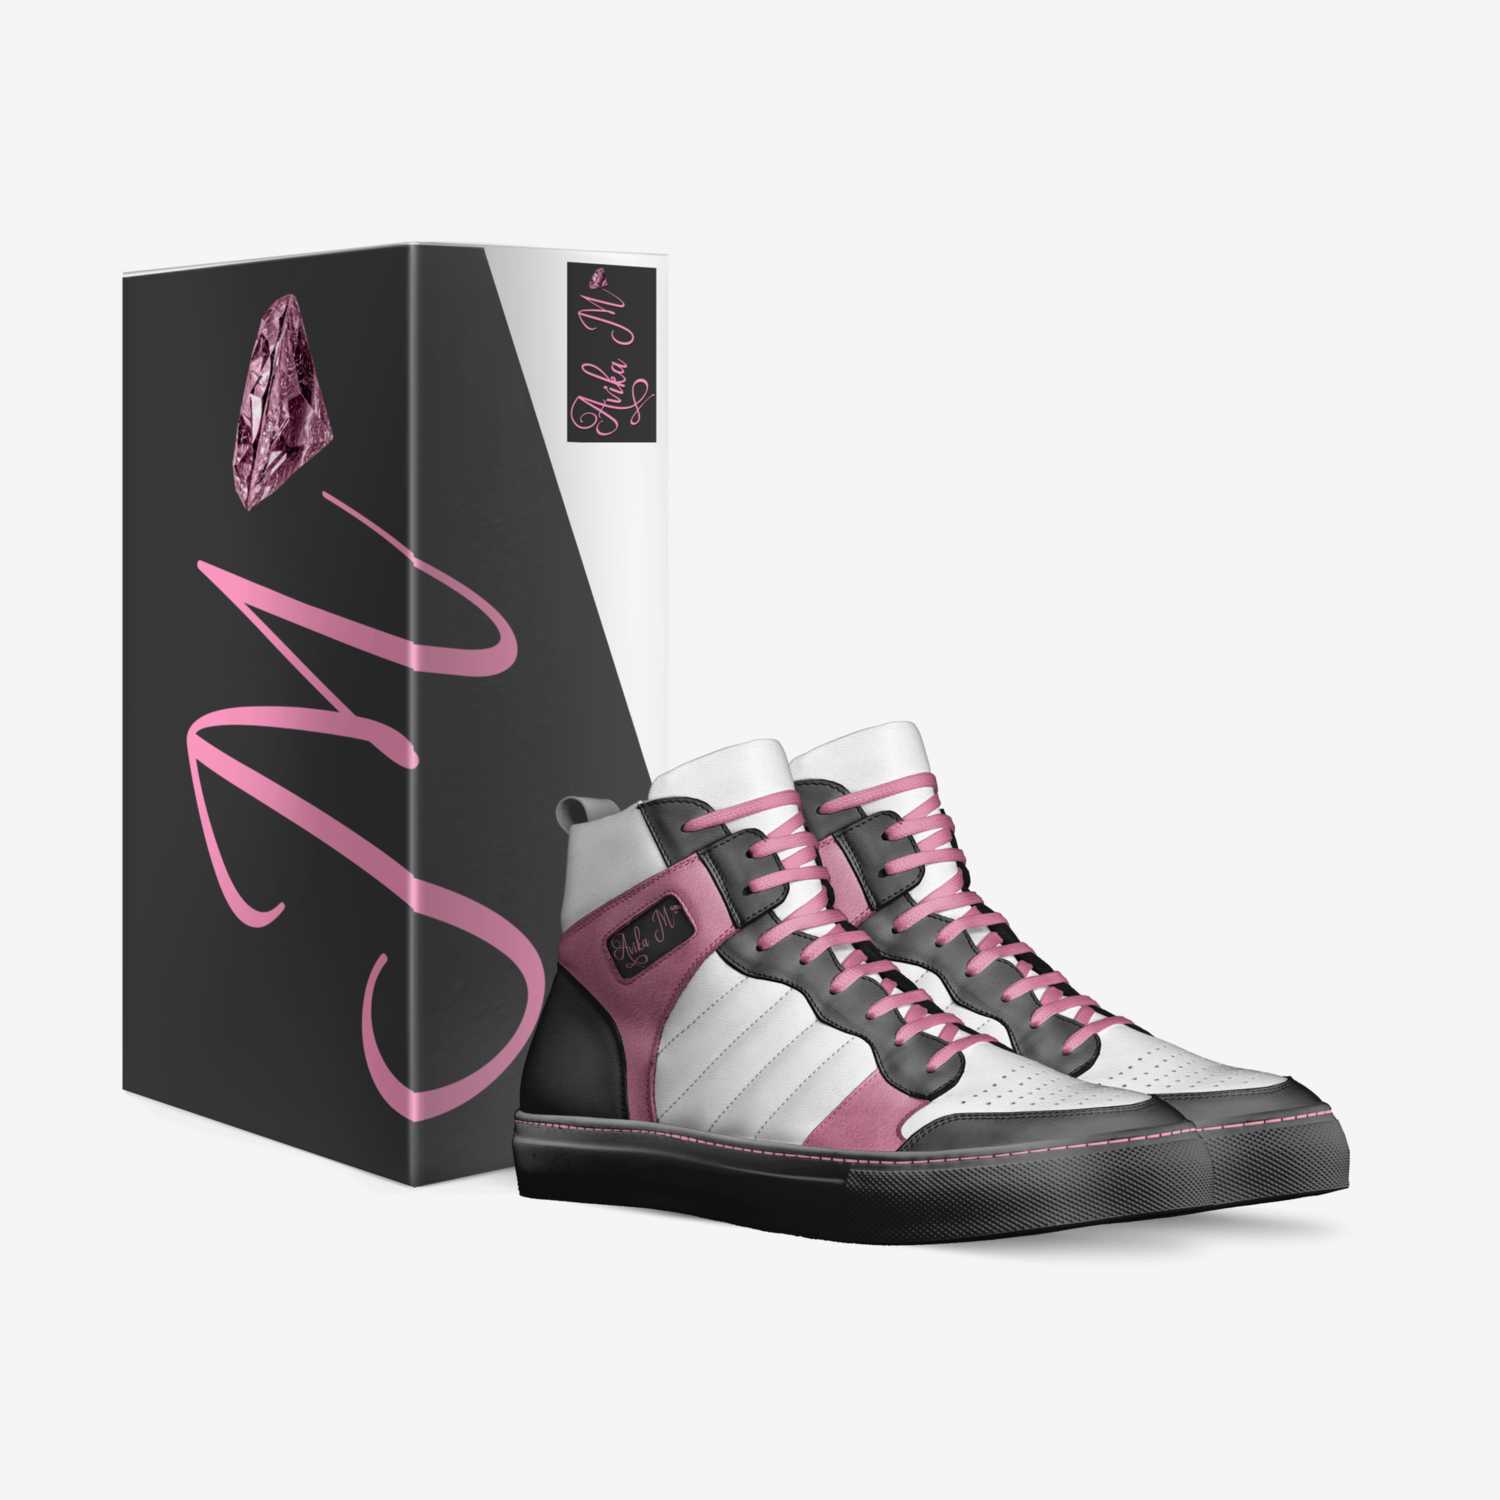 Avika M custom made in Italy shoes by Avika Moreno | Box view